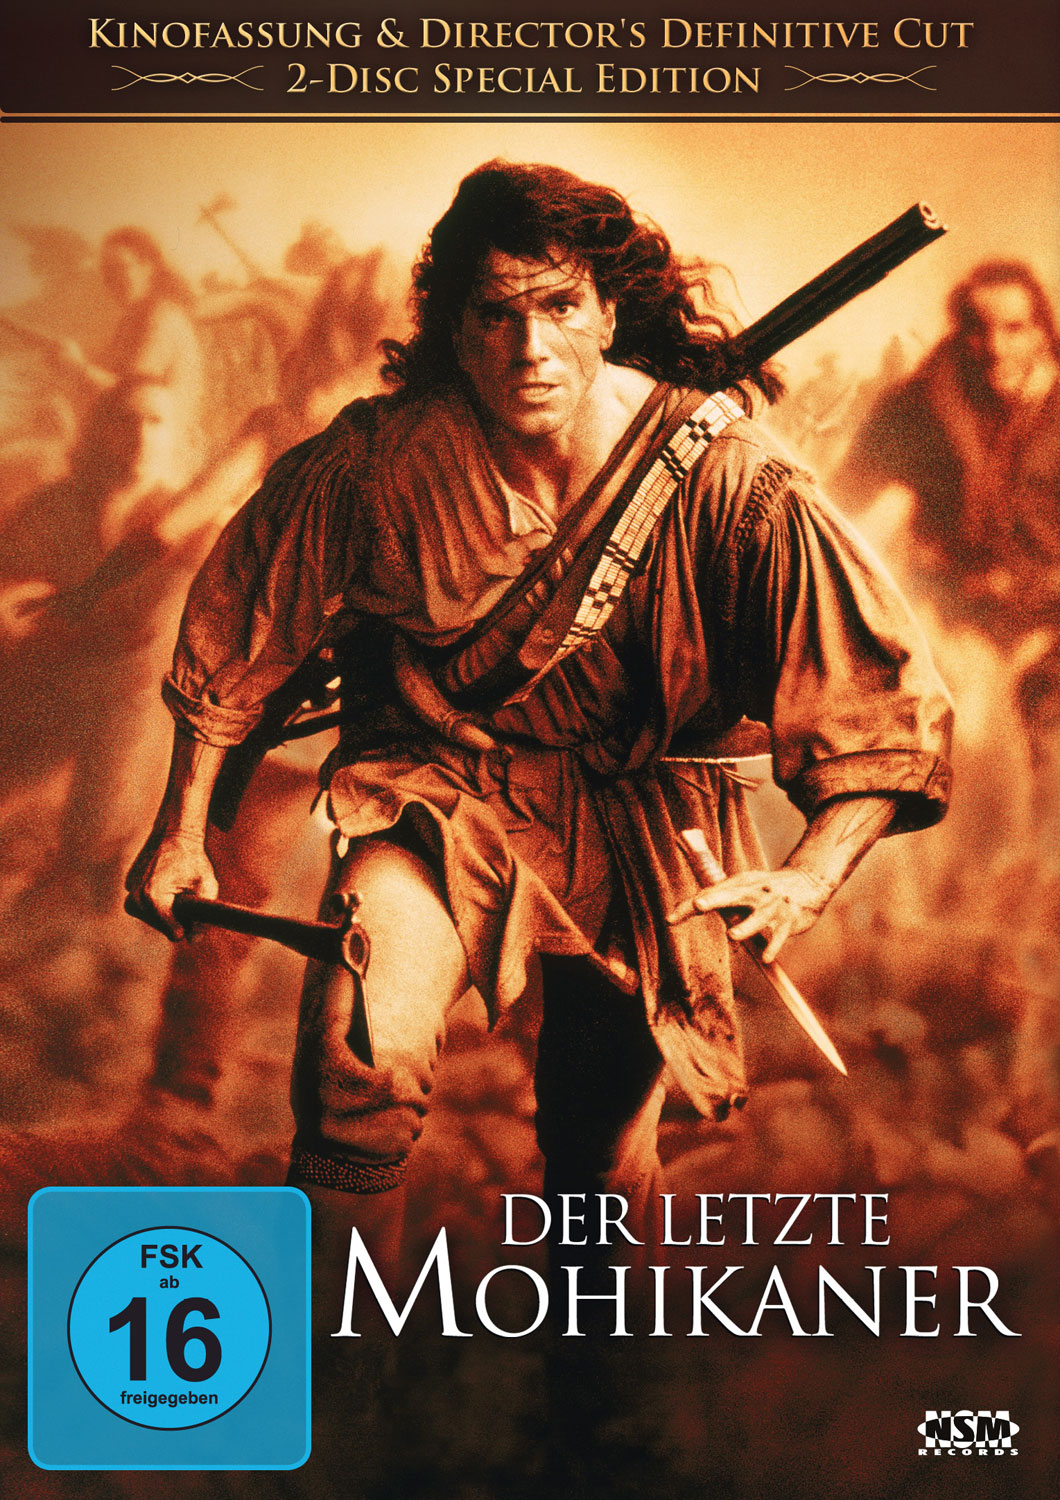 LETZTE MOHIKANER, DER - Special Edition (2DVD) - Kinofassung & Directors Definitive Cut